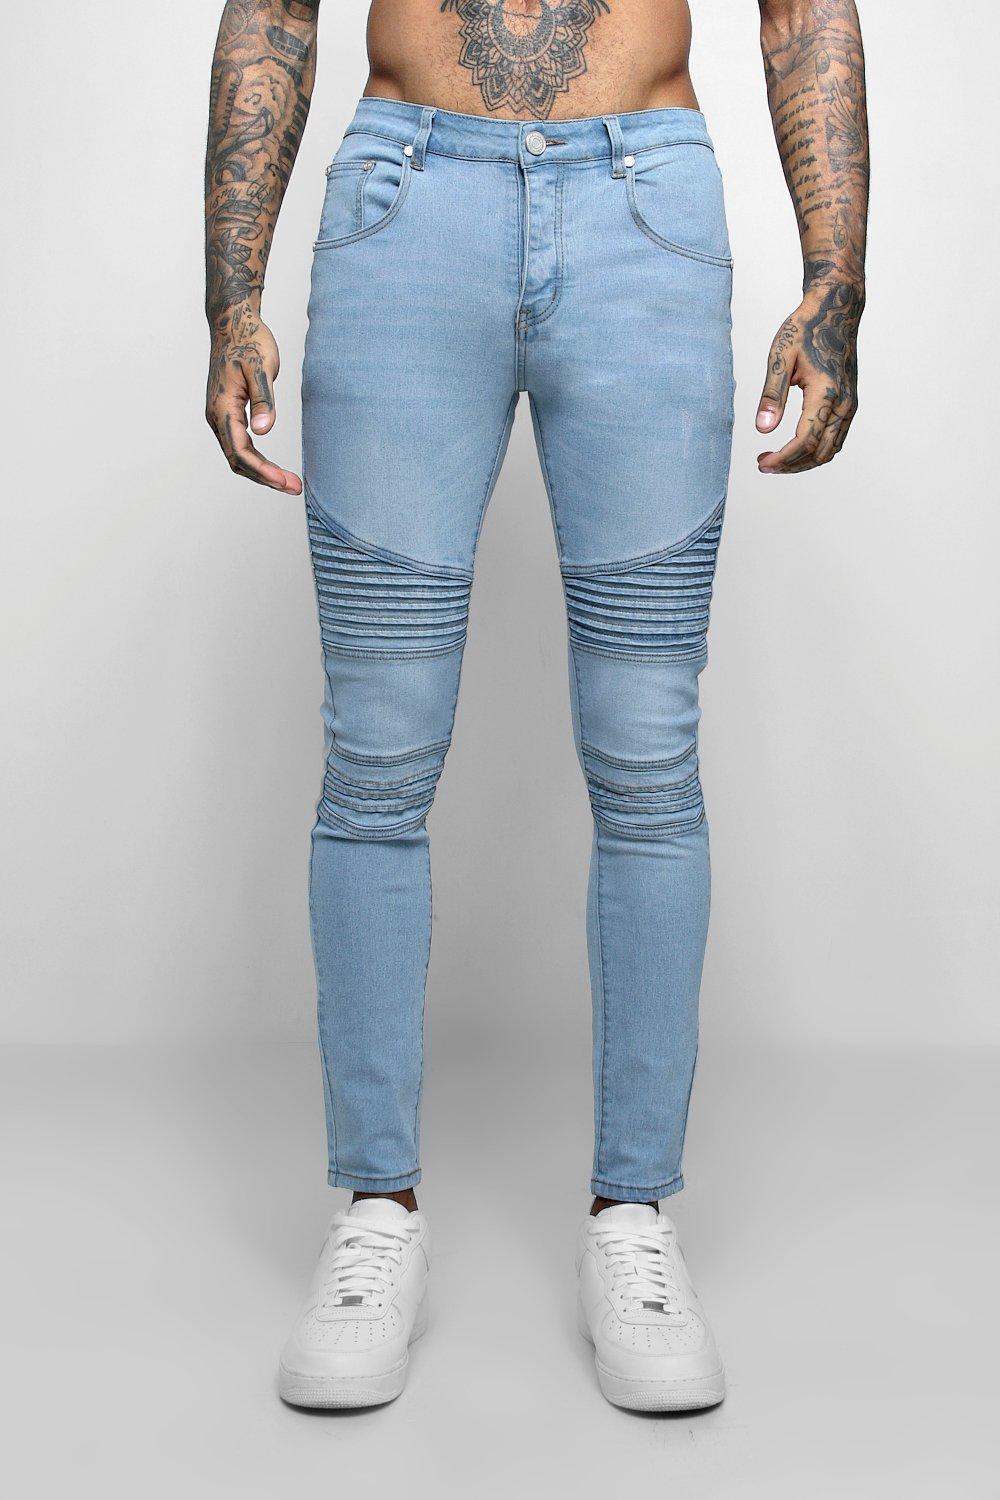 jeans super skinny fit